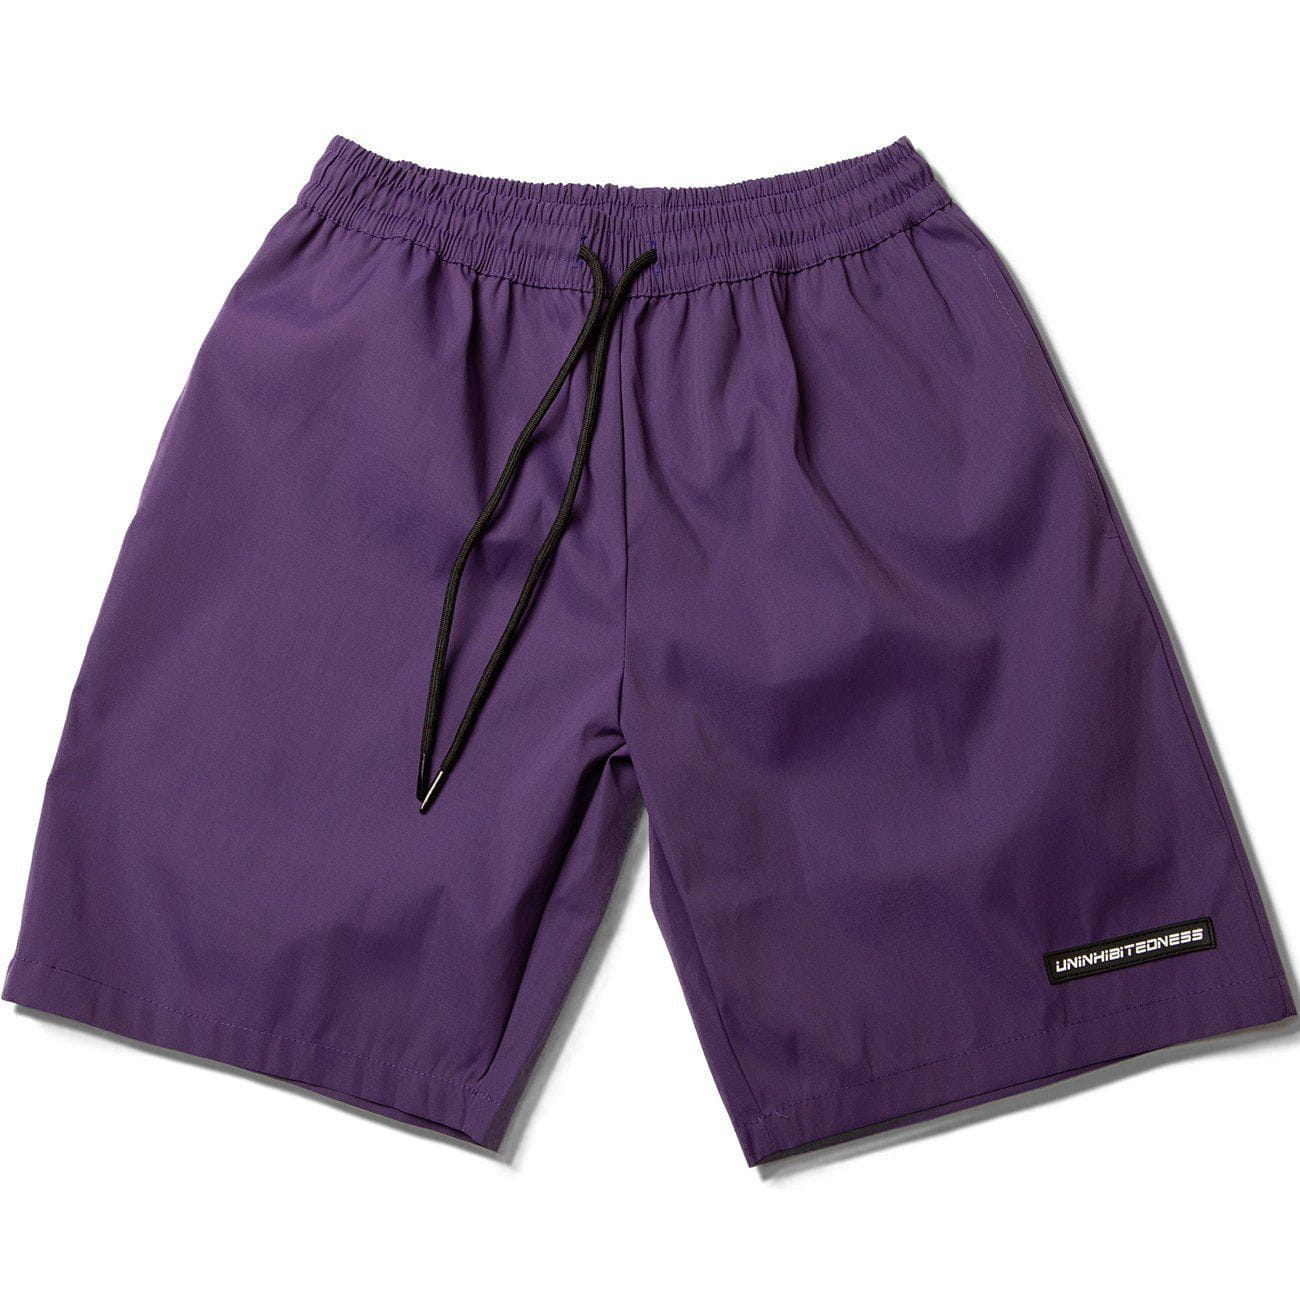 WLS Plain Label Windbreaker Shorts